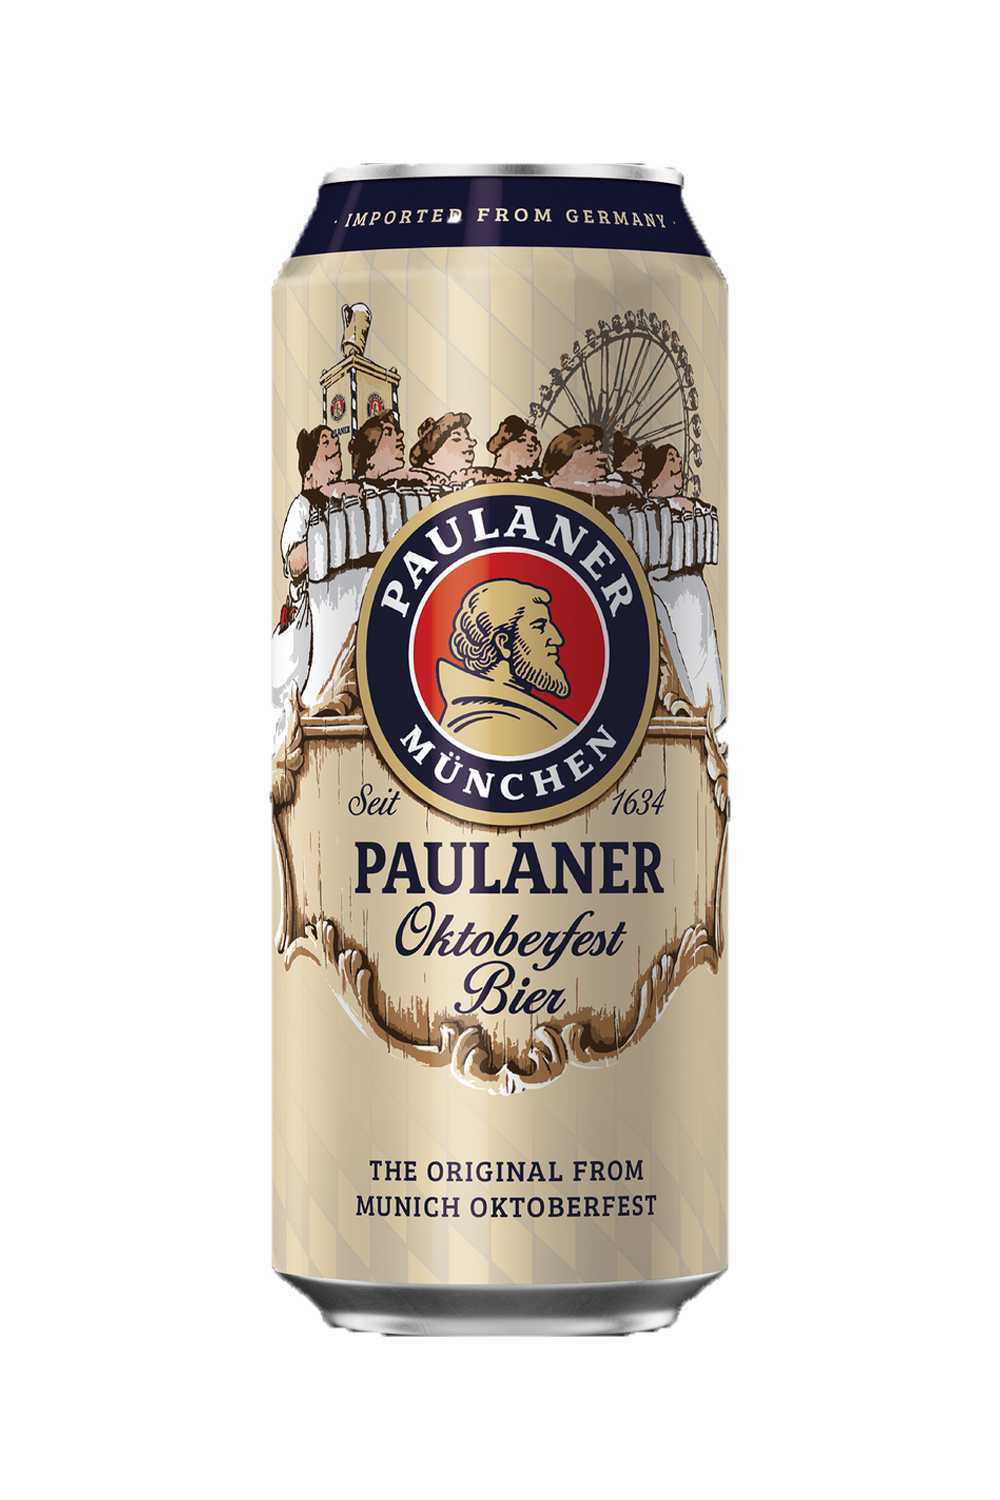 Пиво Паулайнер Октоберфест 6,0% ж/б 0,5 л (Германия)